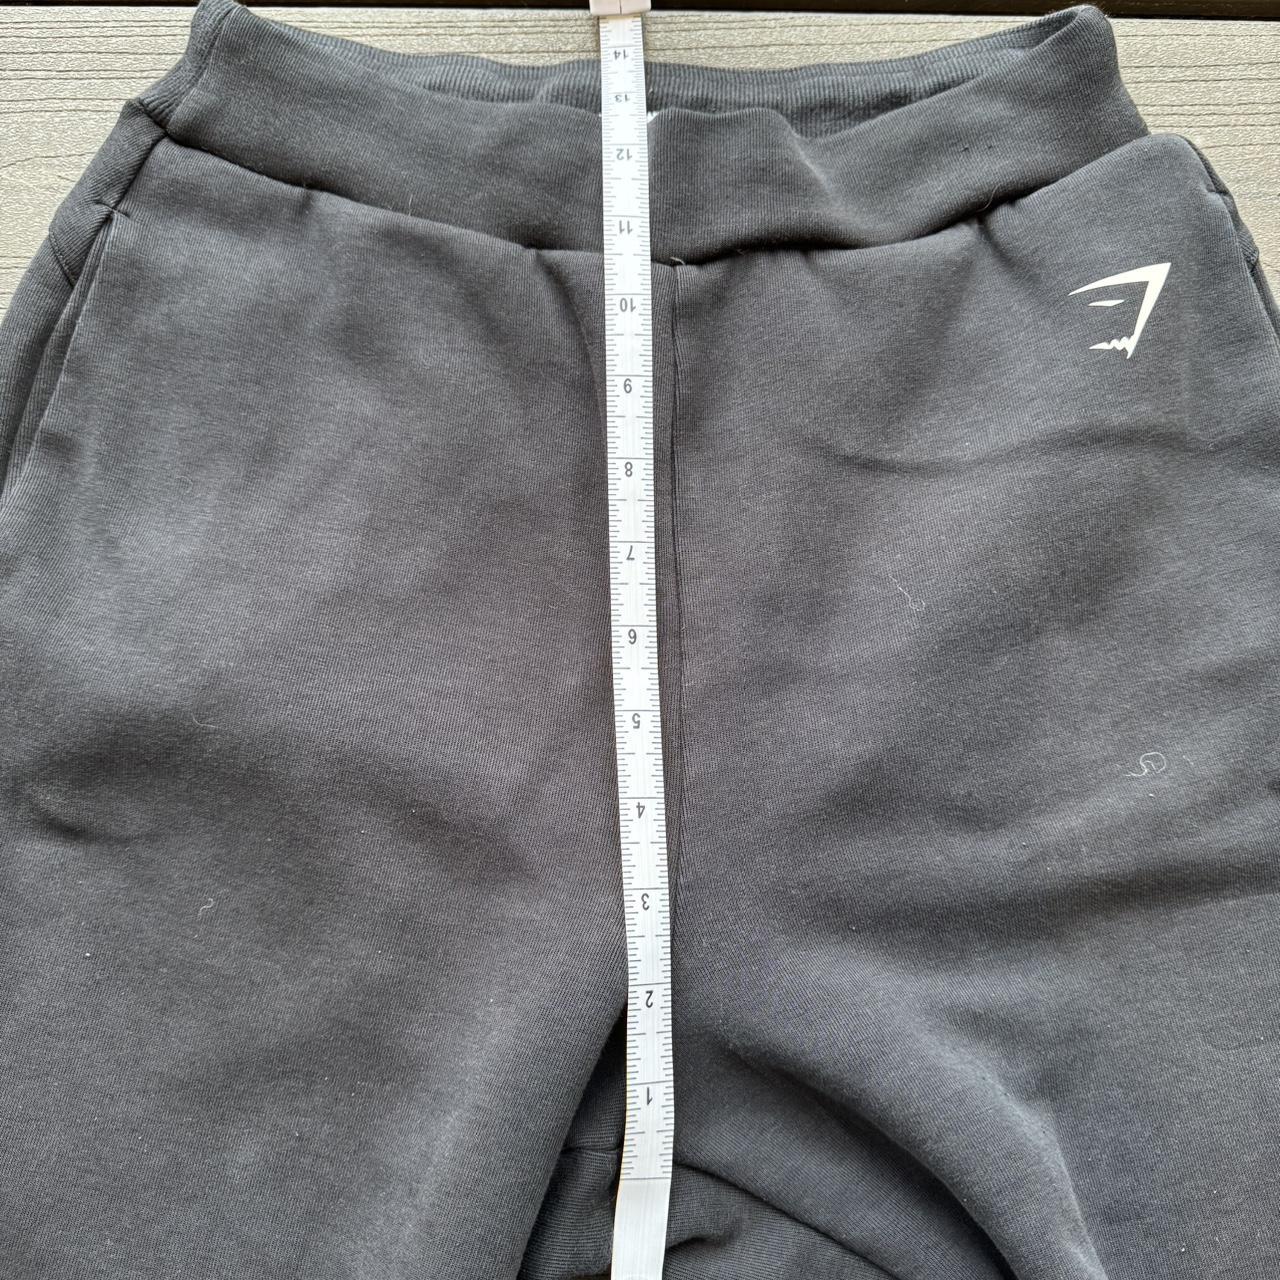 Gymshark Black Men's Sweatpants size Small Pockets - Depop